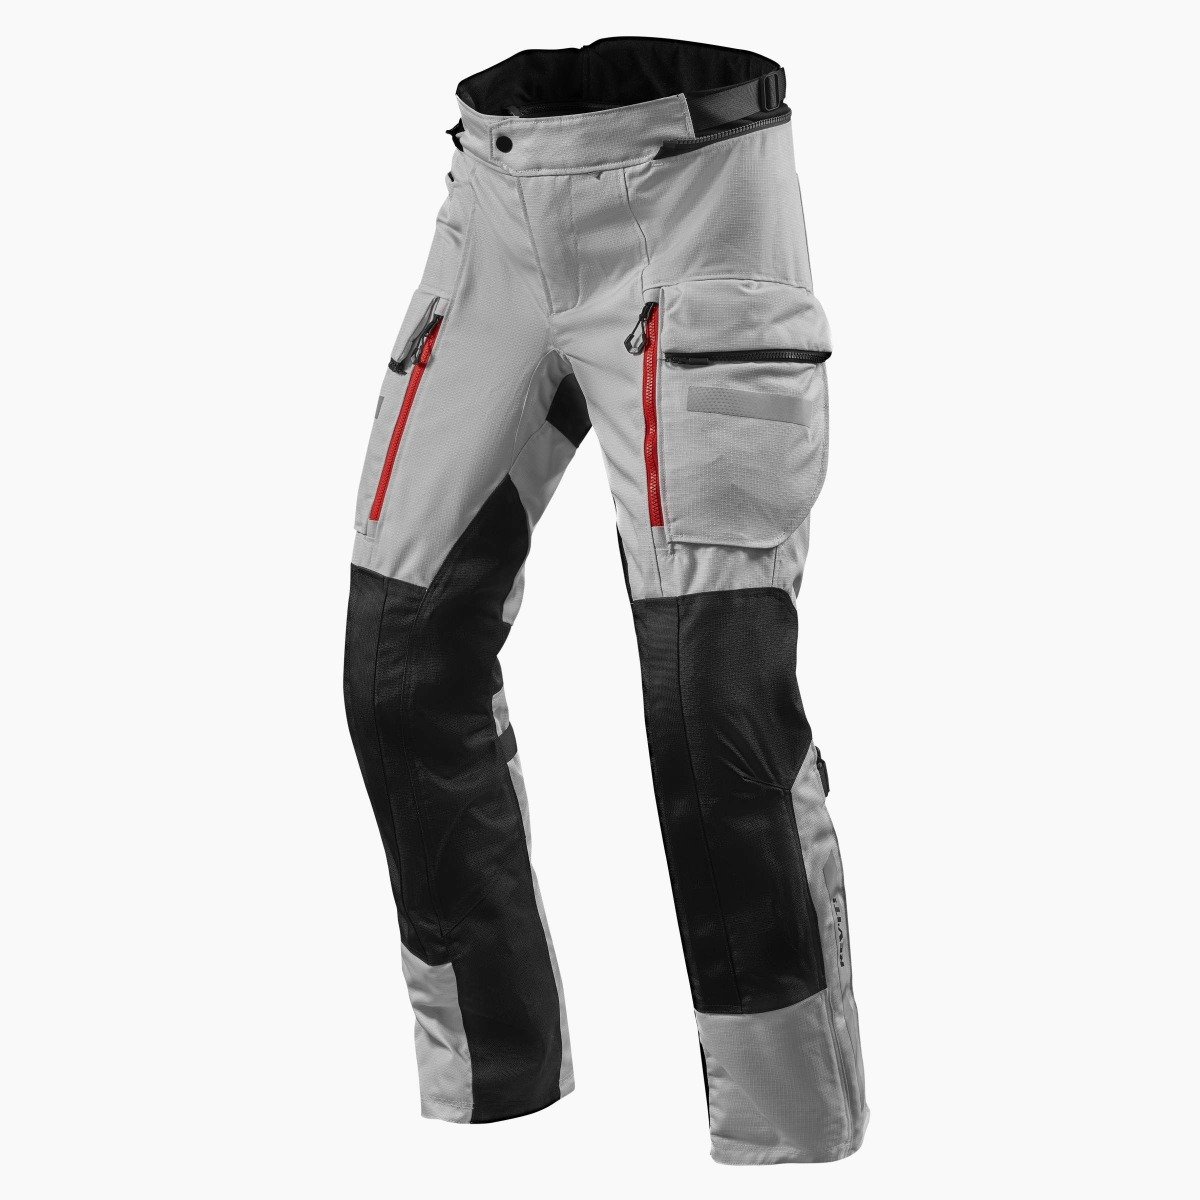 Image of REV'IT! Sand 4 H2O Long Silver Black Motorcycle Pants Talla M